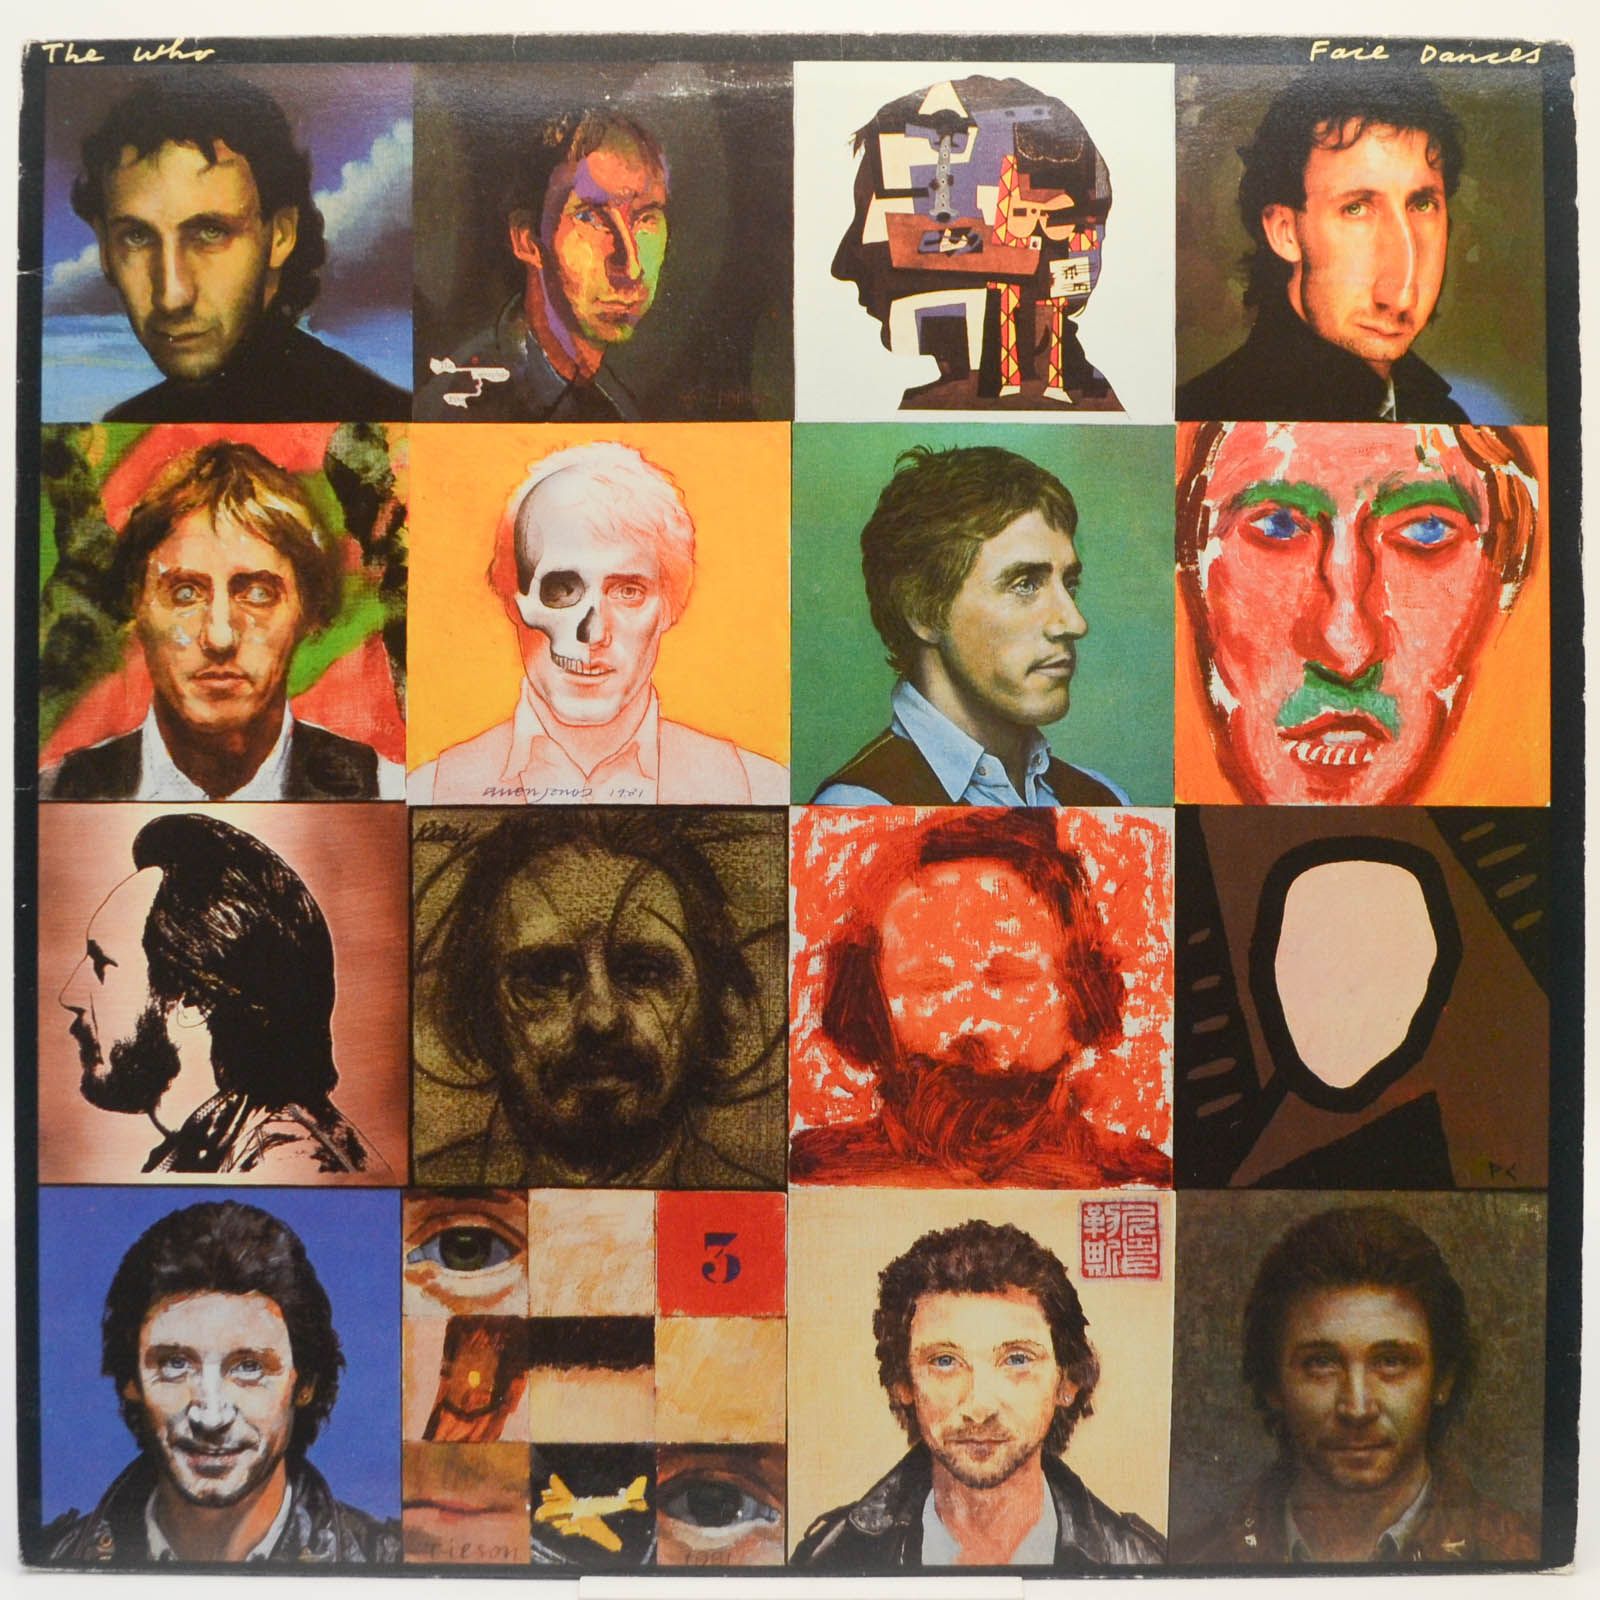 Who — Face Dances (poster), 1981